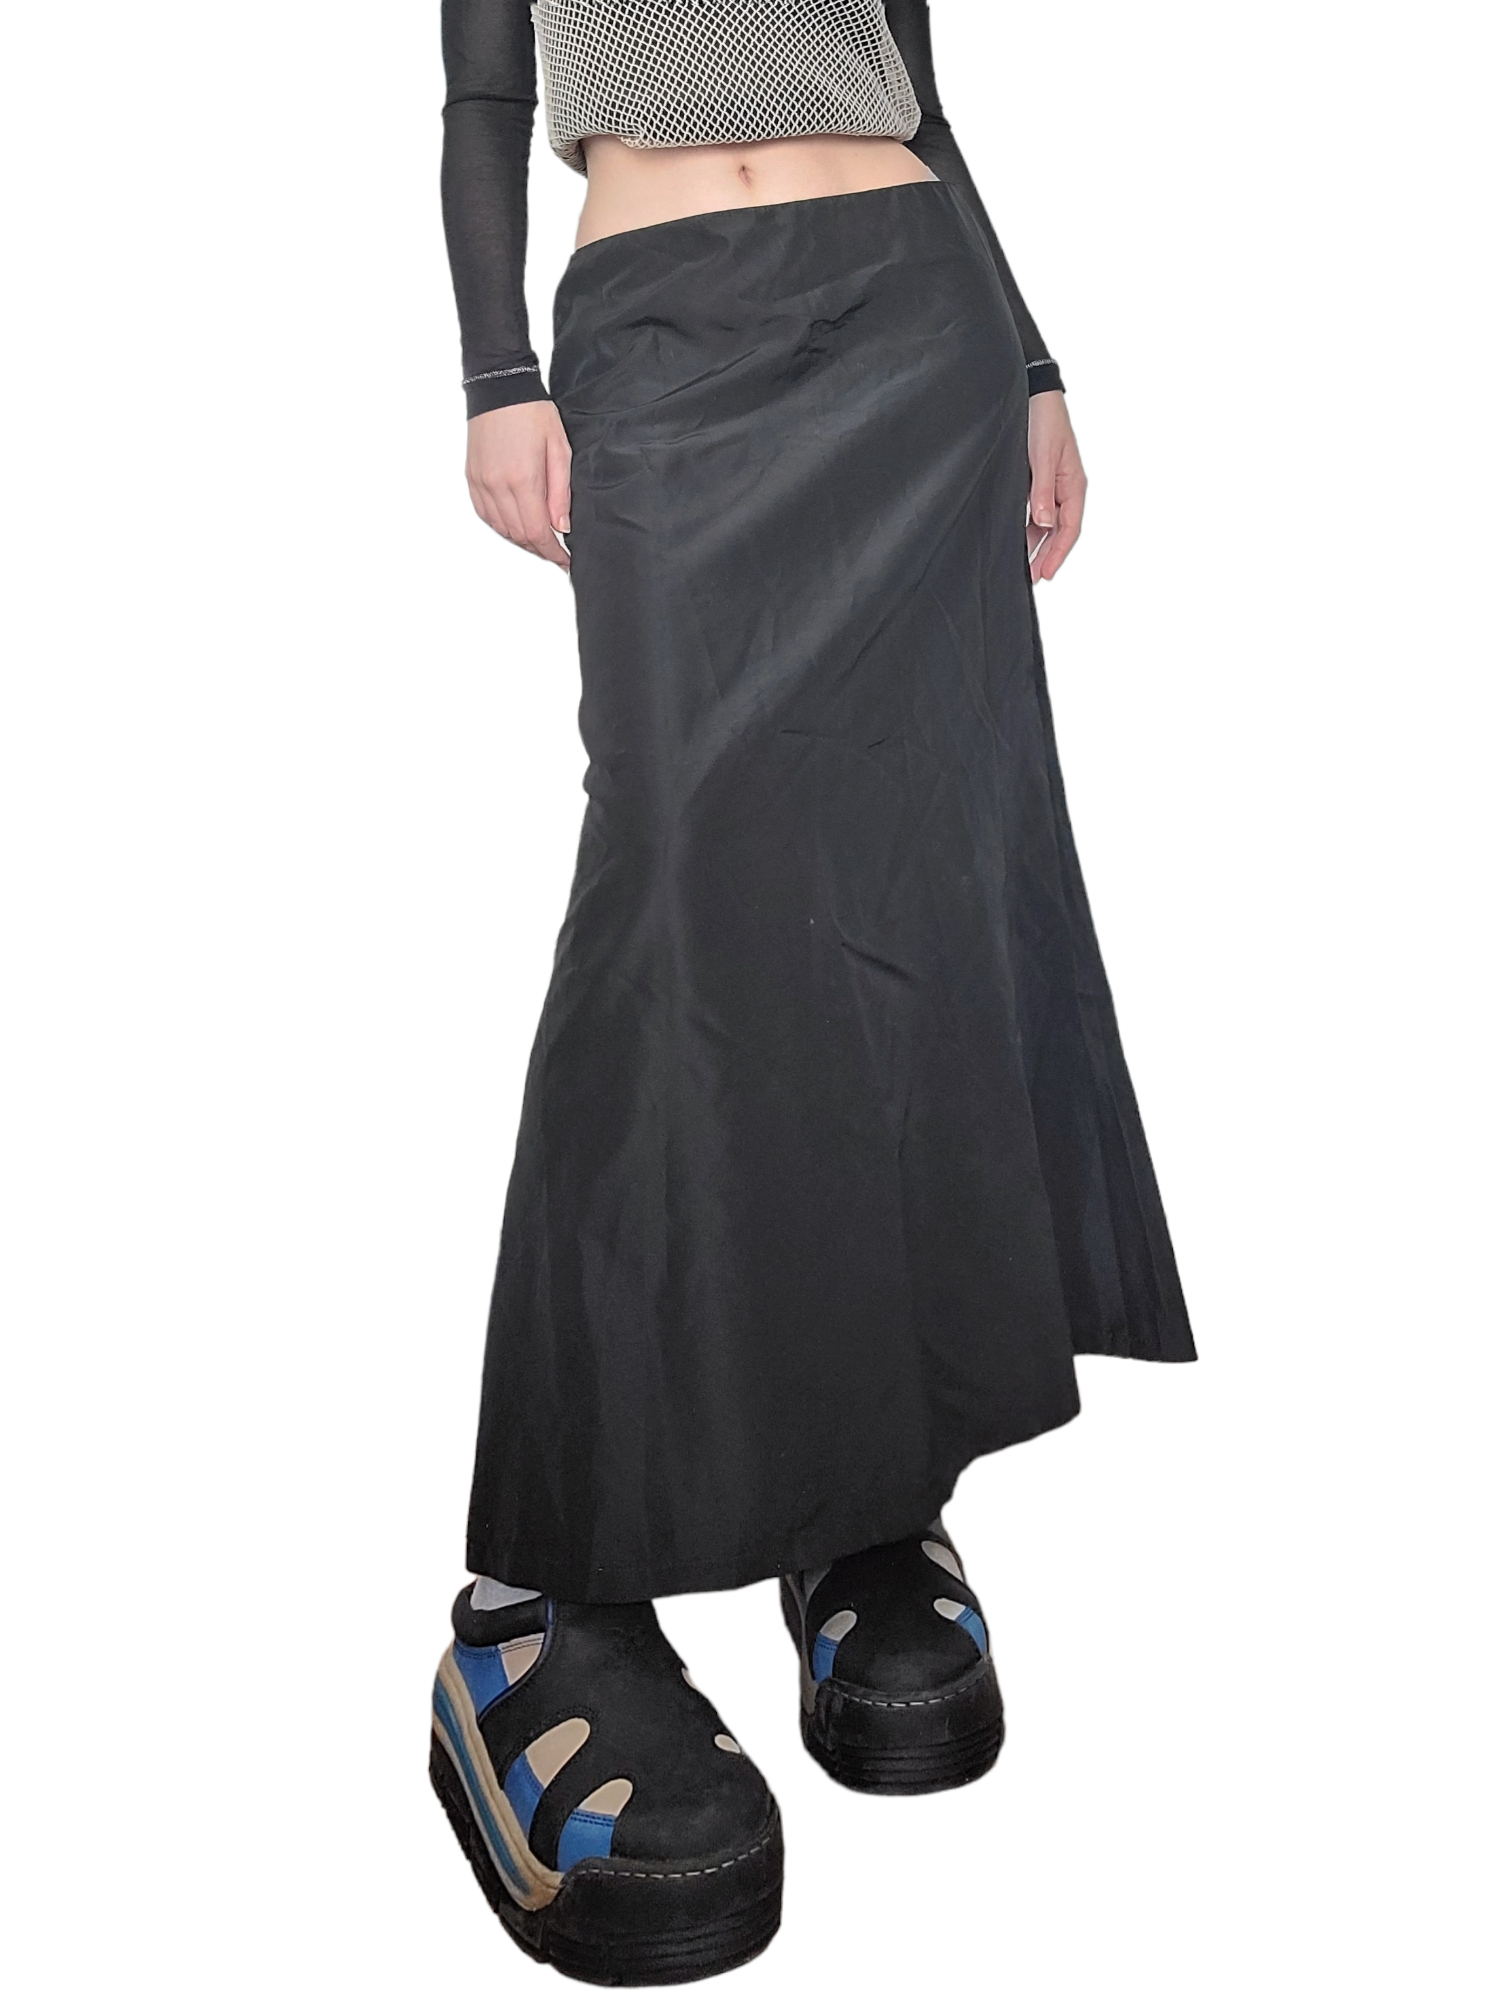 Maxi skirt harajuku gorpcore vintage noire subversive style cybery2k